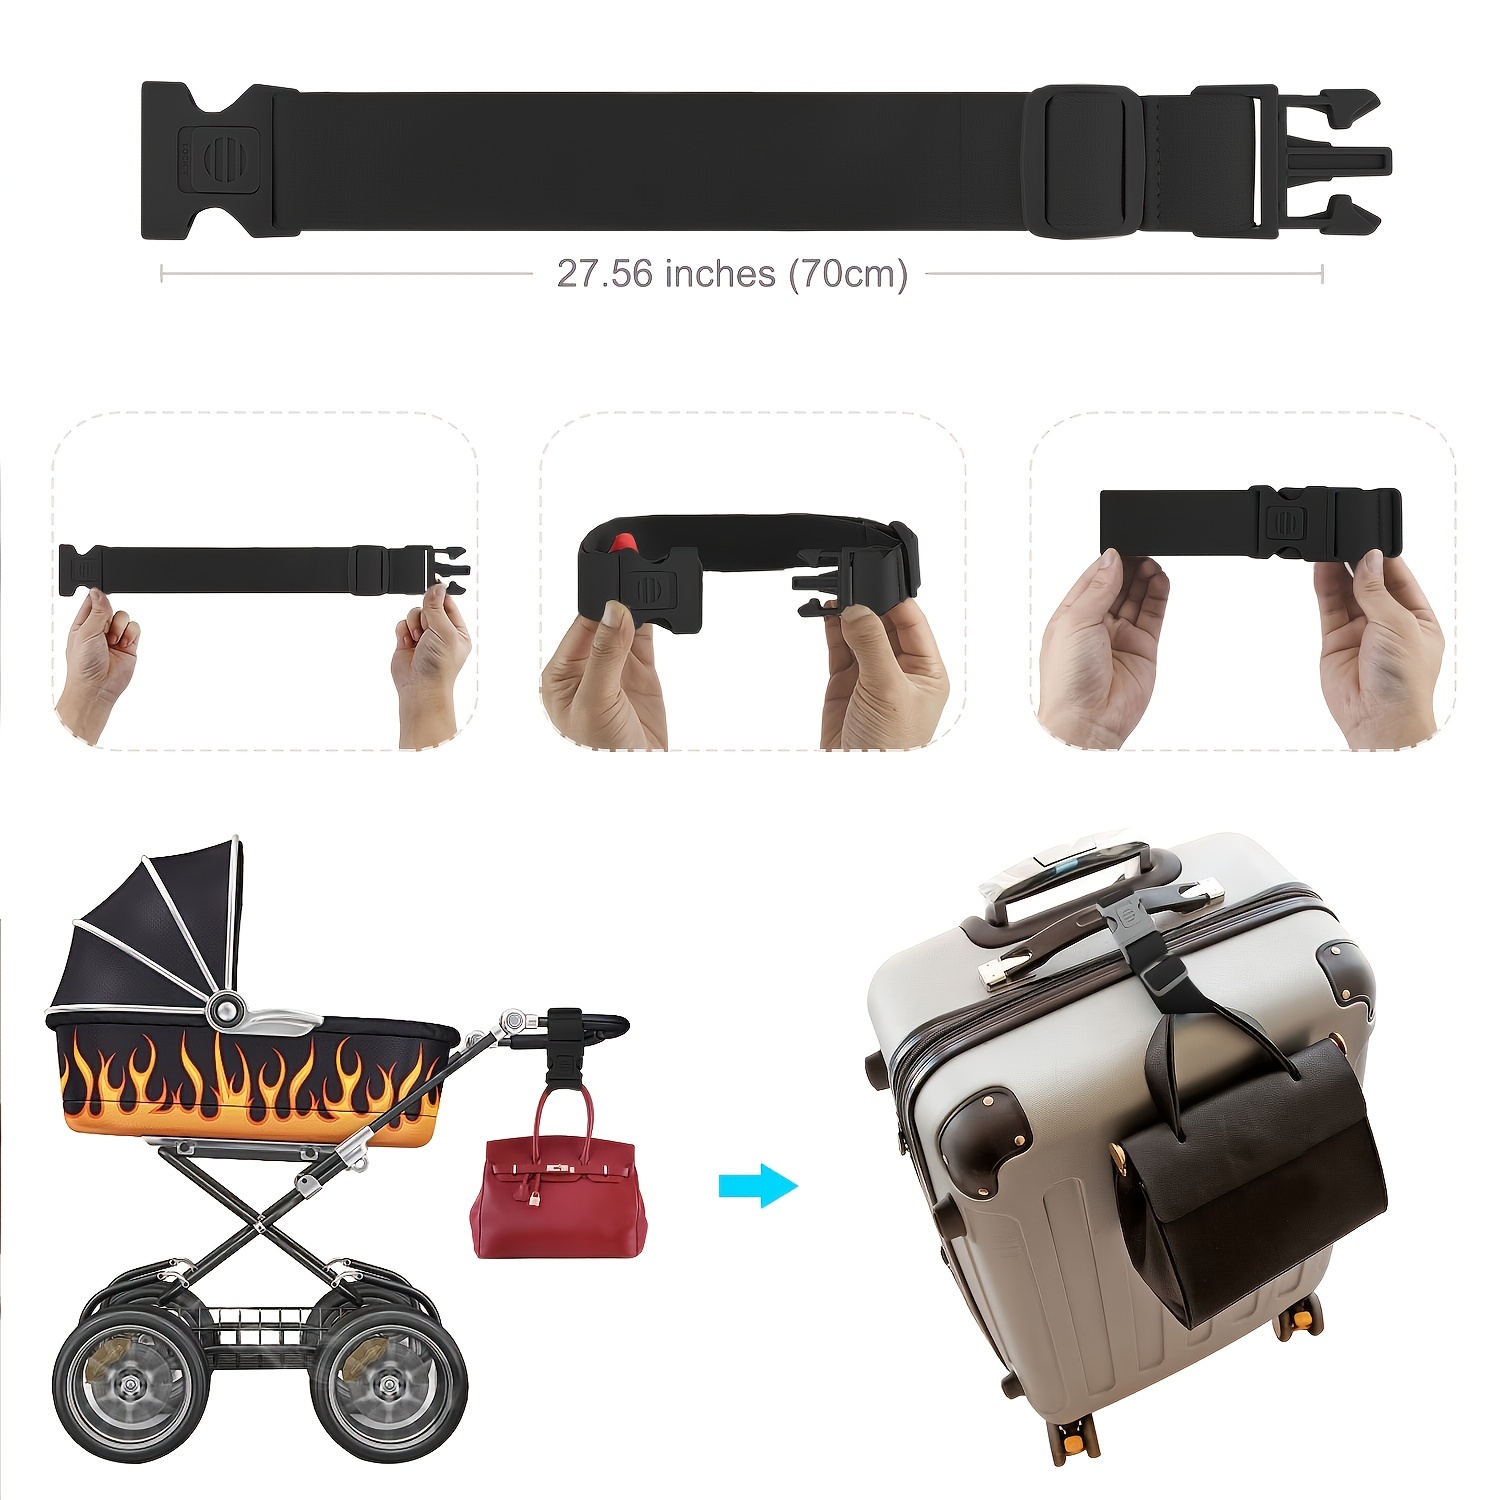 Black Small Travel Luggage Straps Short Adjustable Suitcase Belt Buckle  Holder